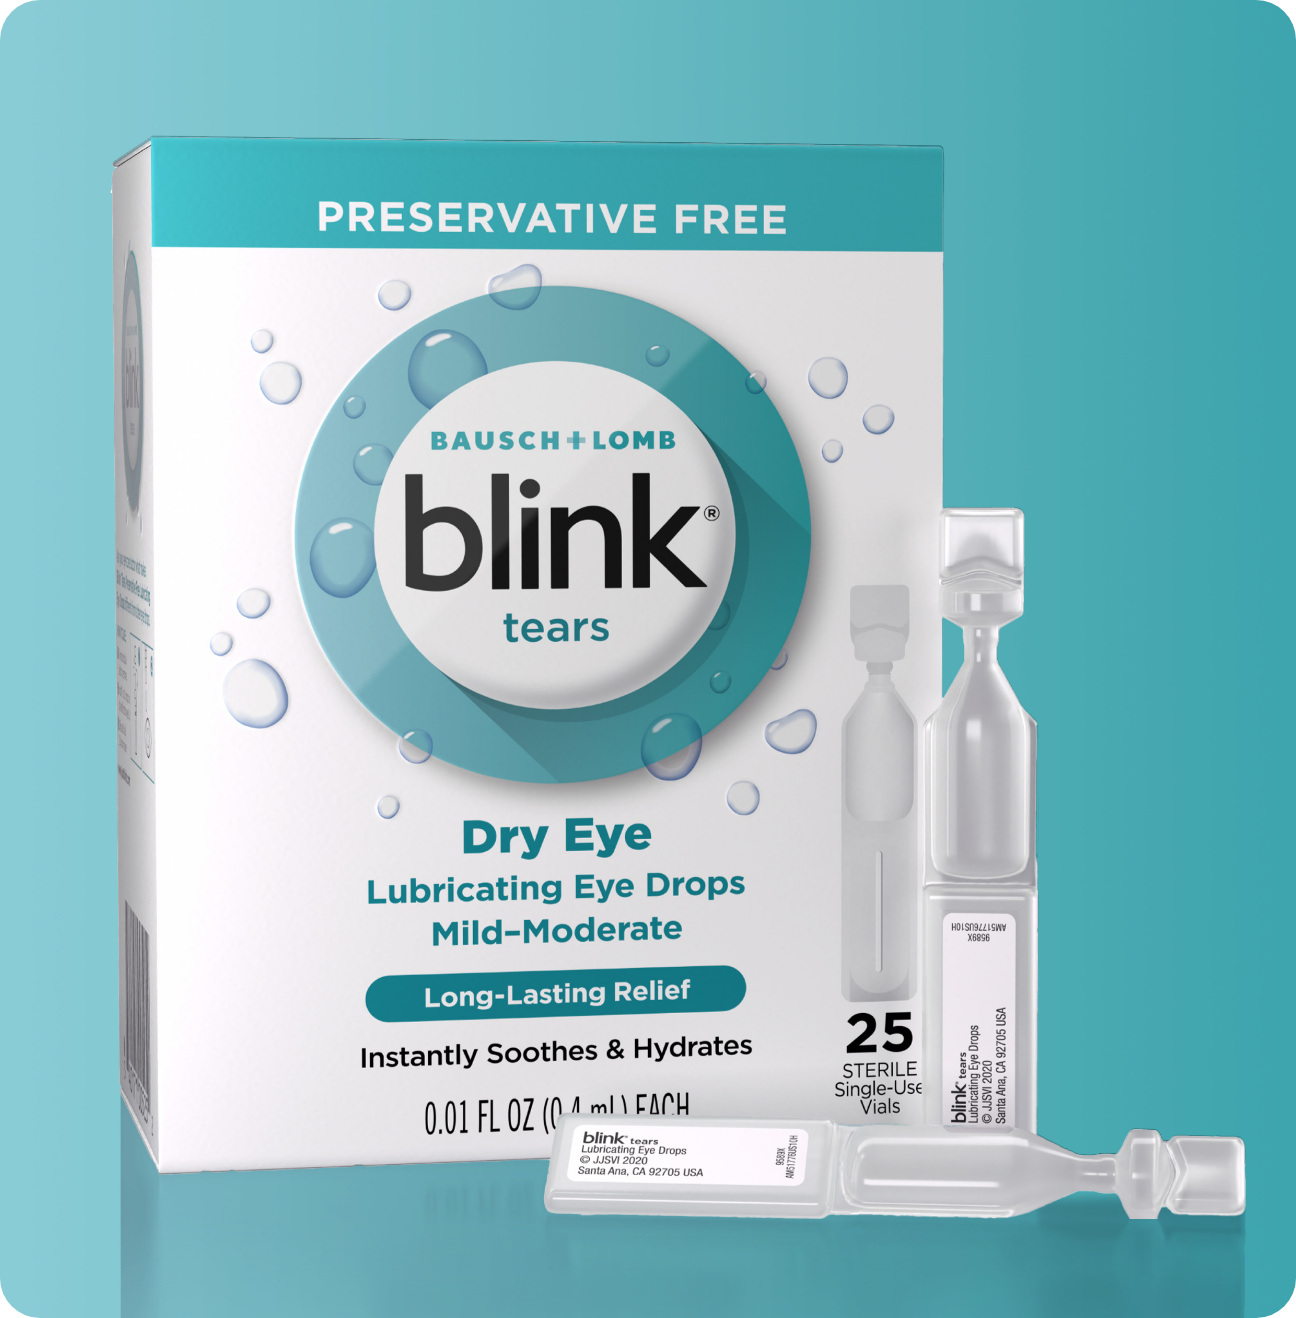 Blink Tears Preservative Free Lubricating Eye Drops vials and carton